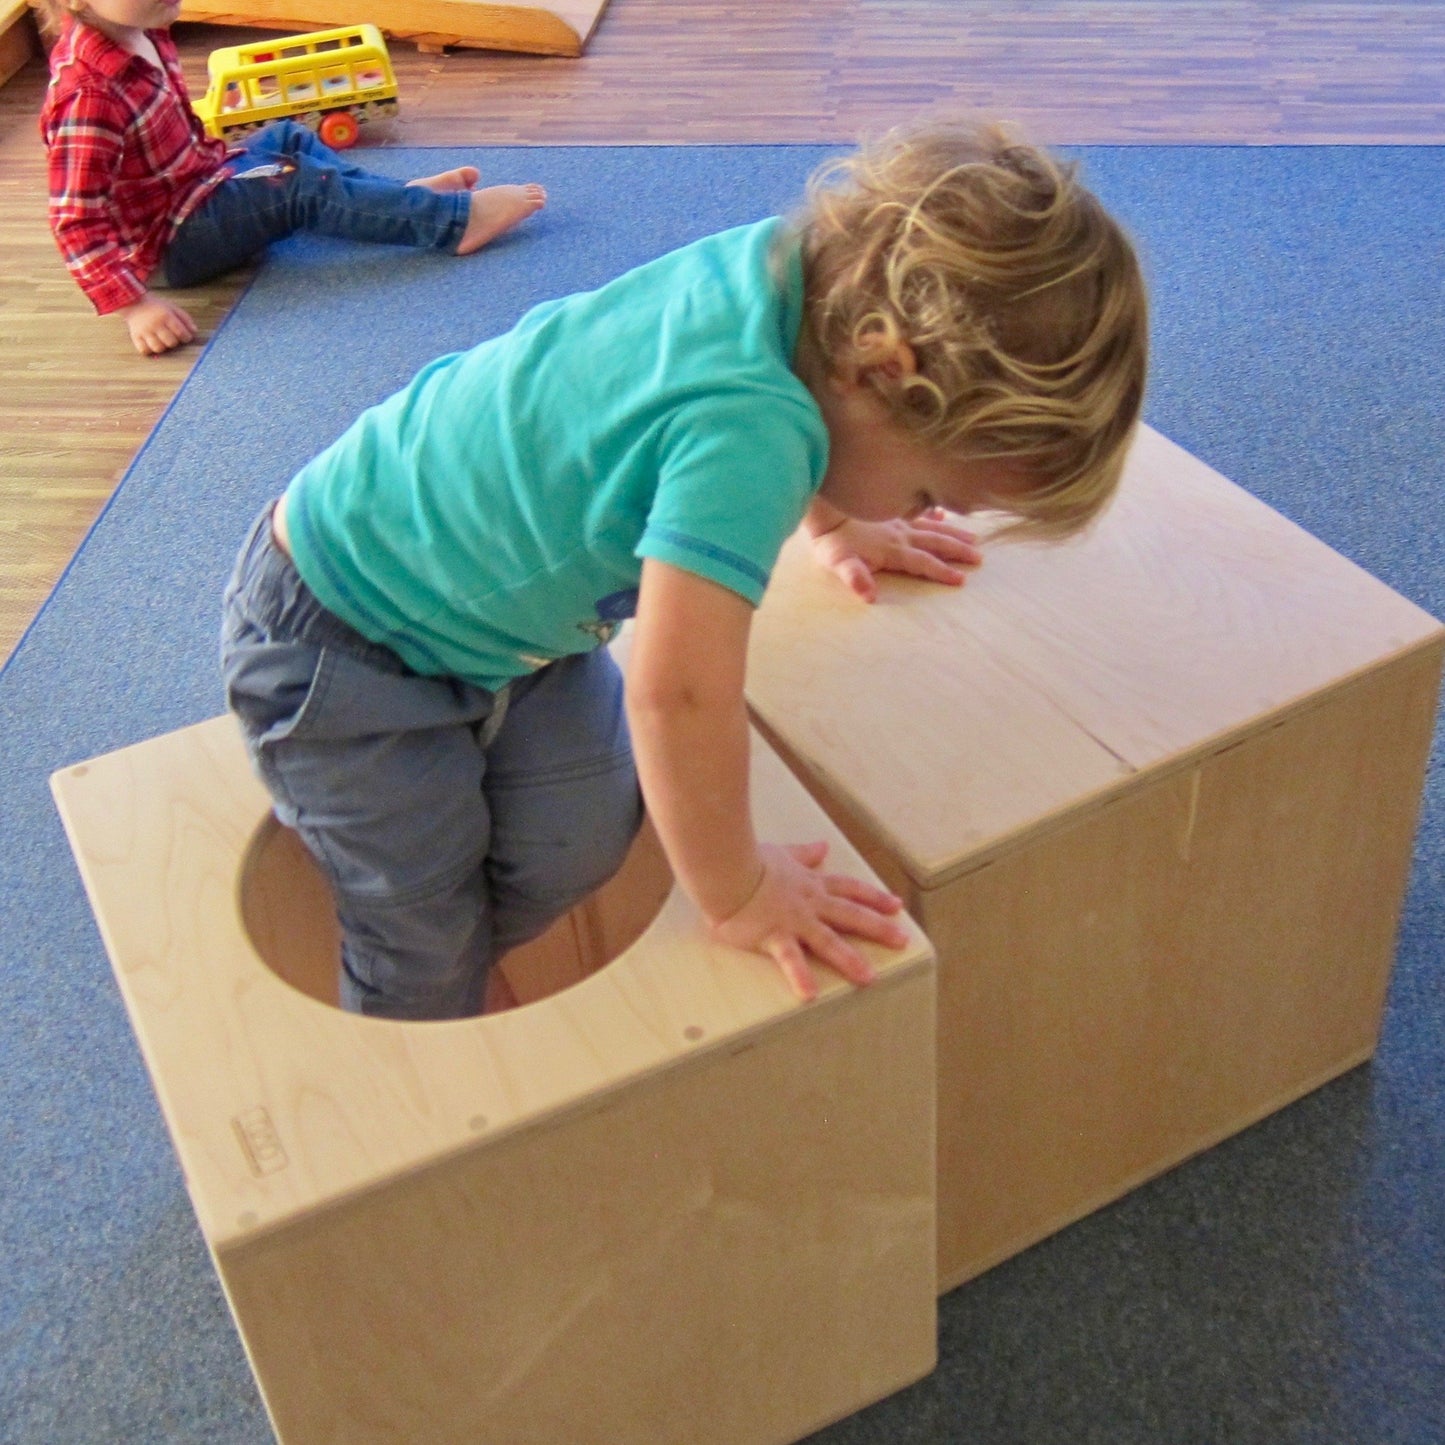 Crawl Boxes - RAD Children's Furniture - pikler triangle - montessori toddler furniture - climbing triangle - nursery room